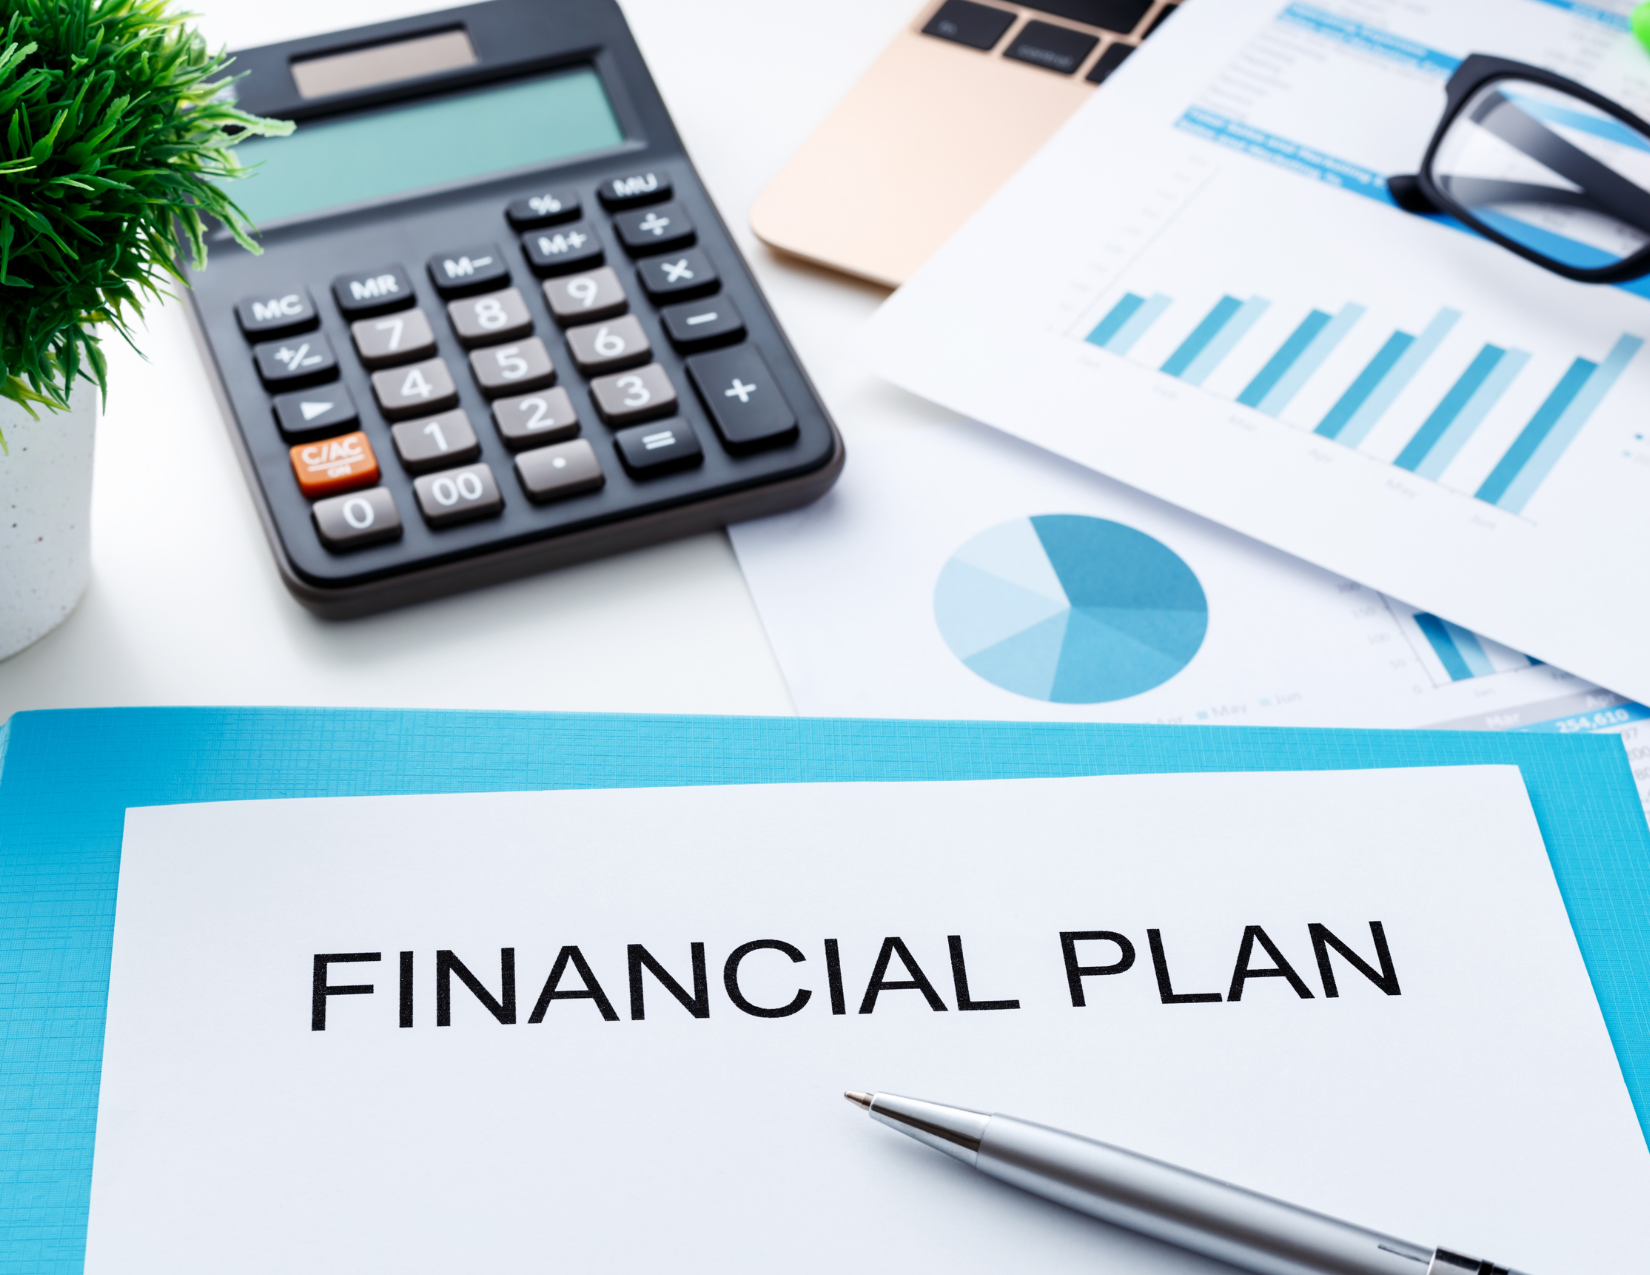 quarterly planning your finances.